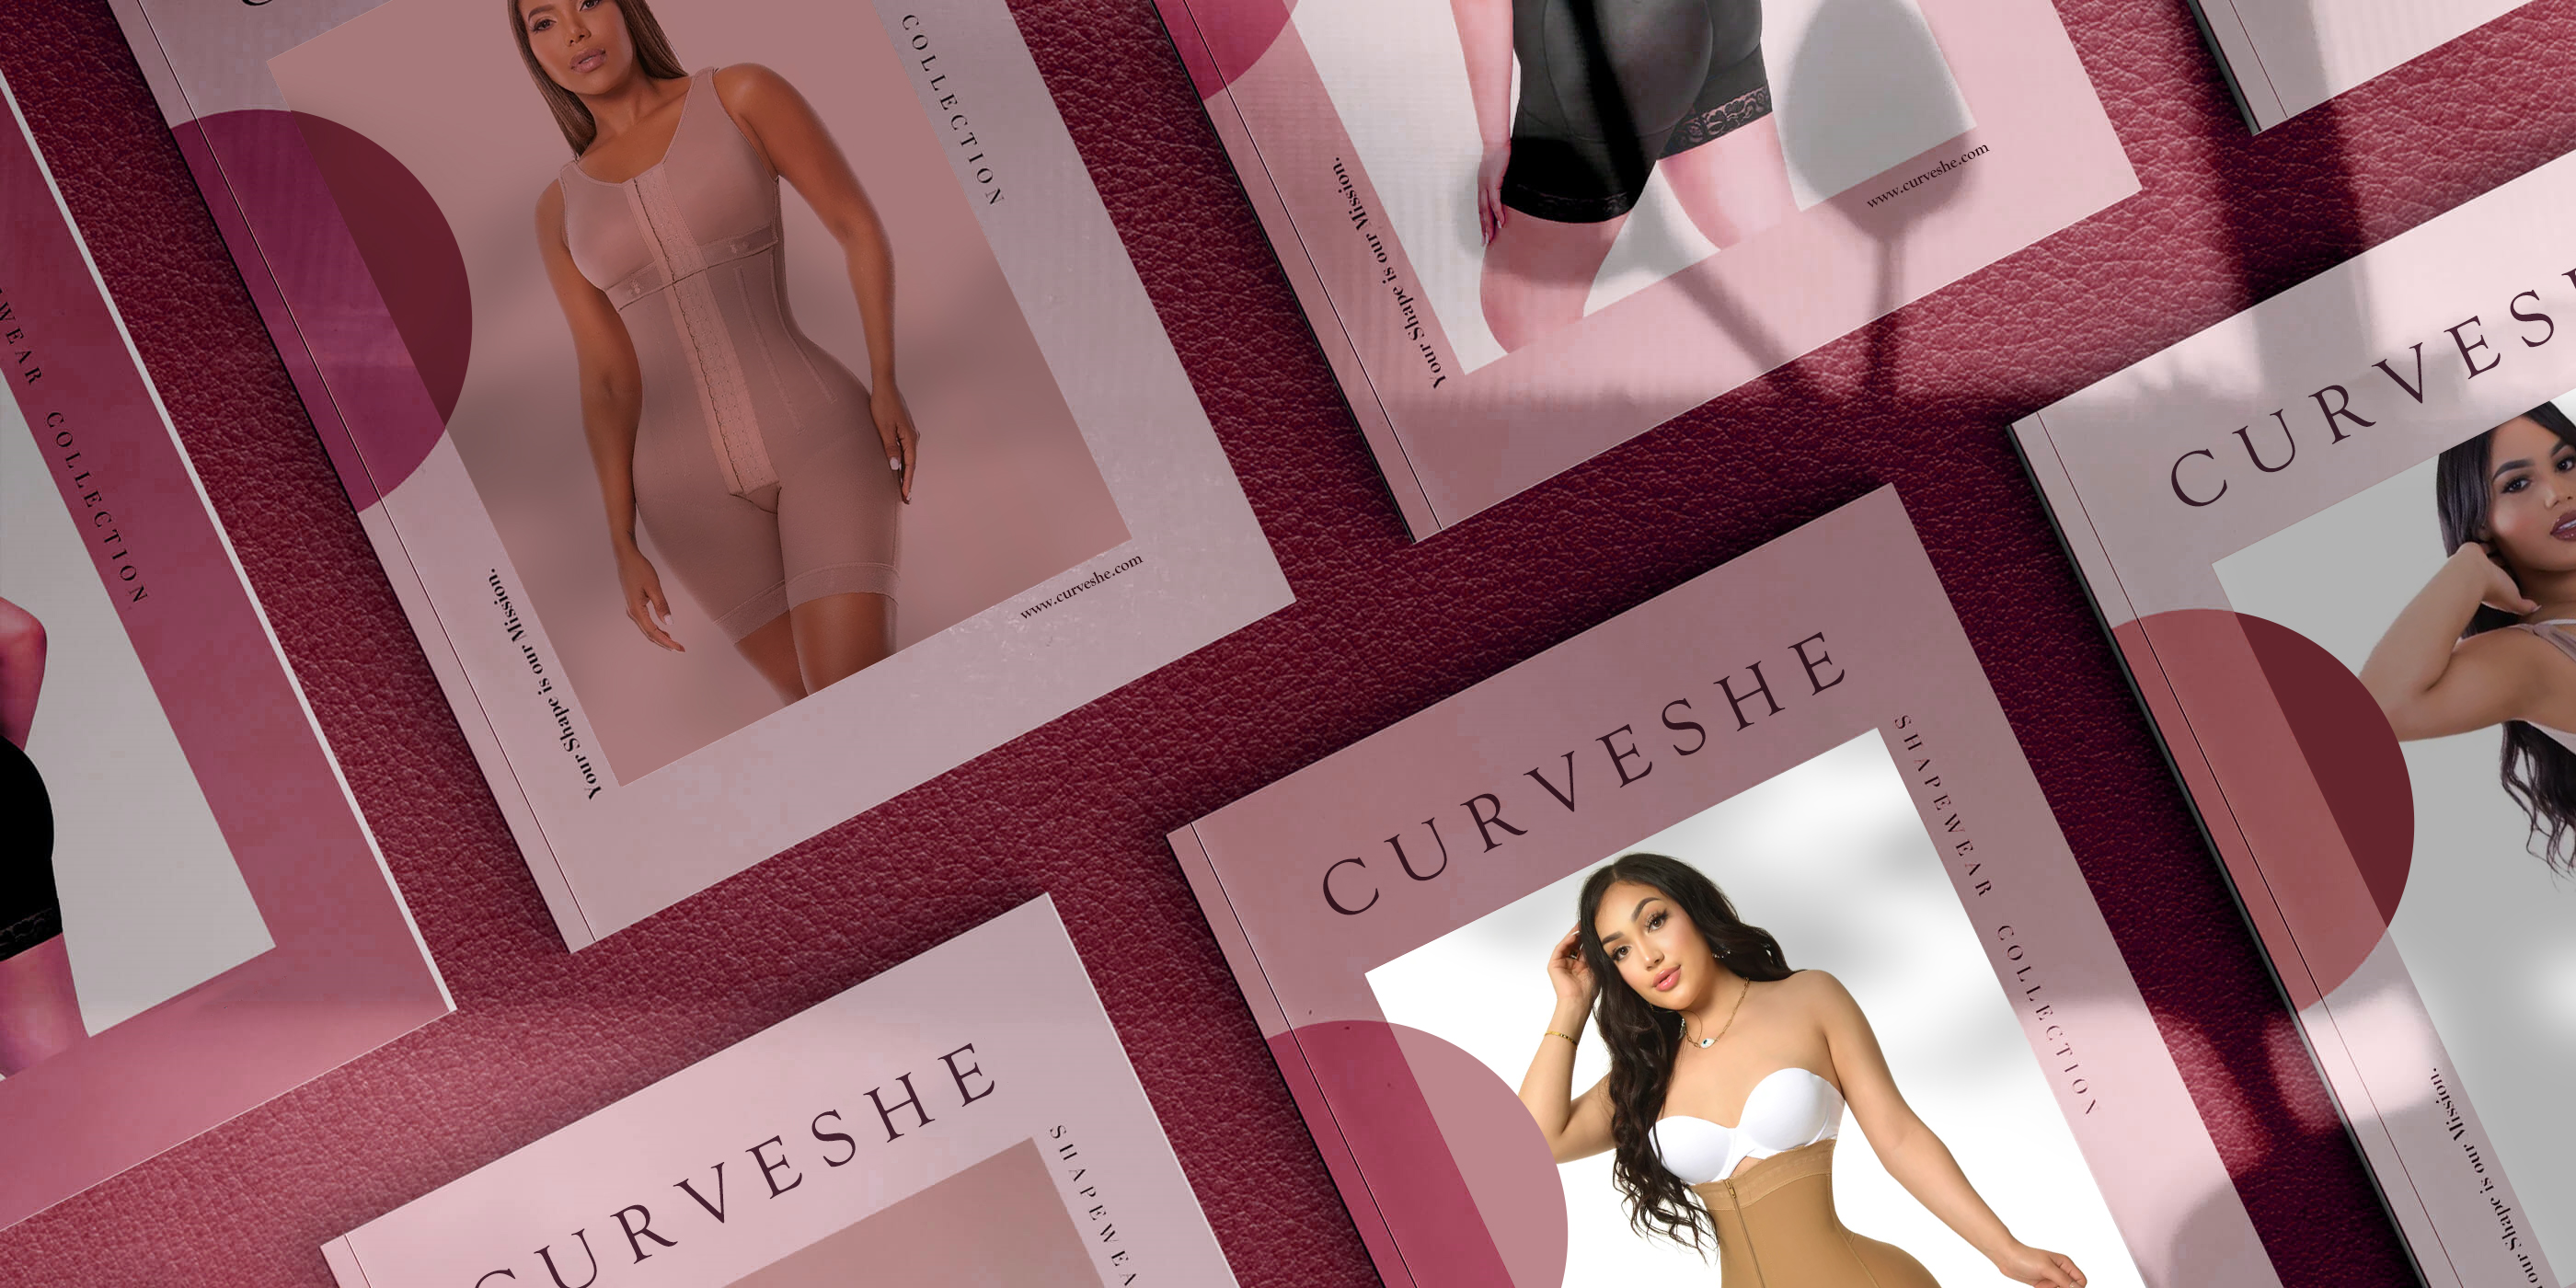 Curveshe Fajas,curvy Fajas For Women,curveshe High Waist Seamless